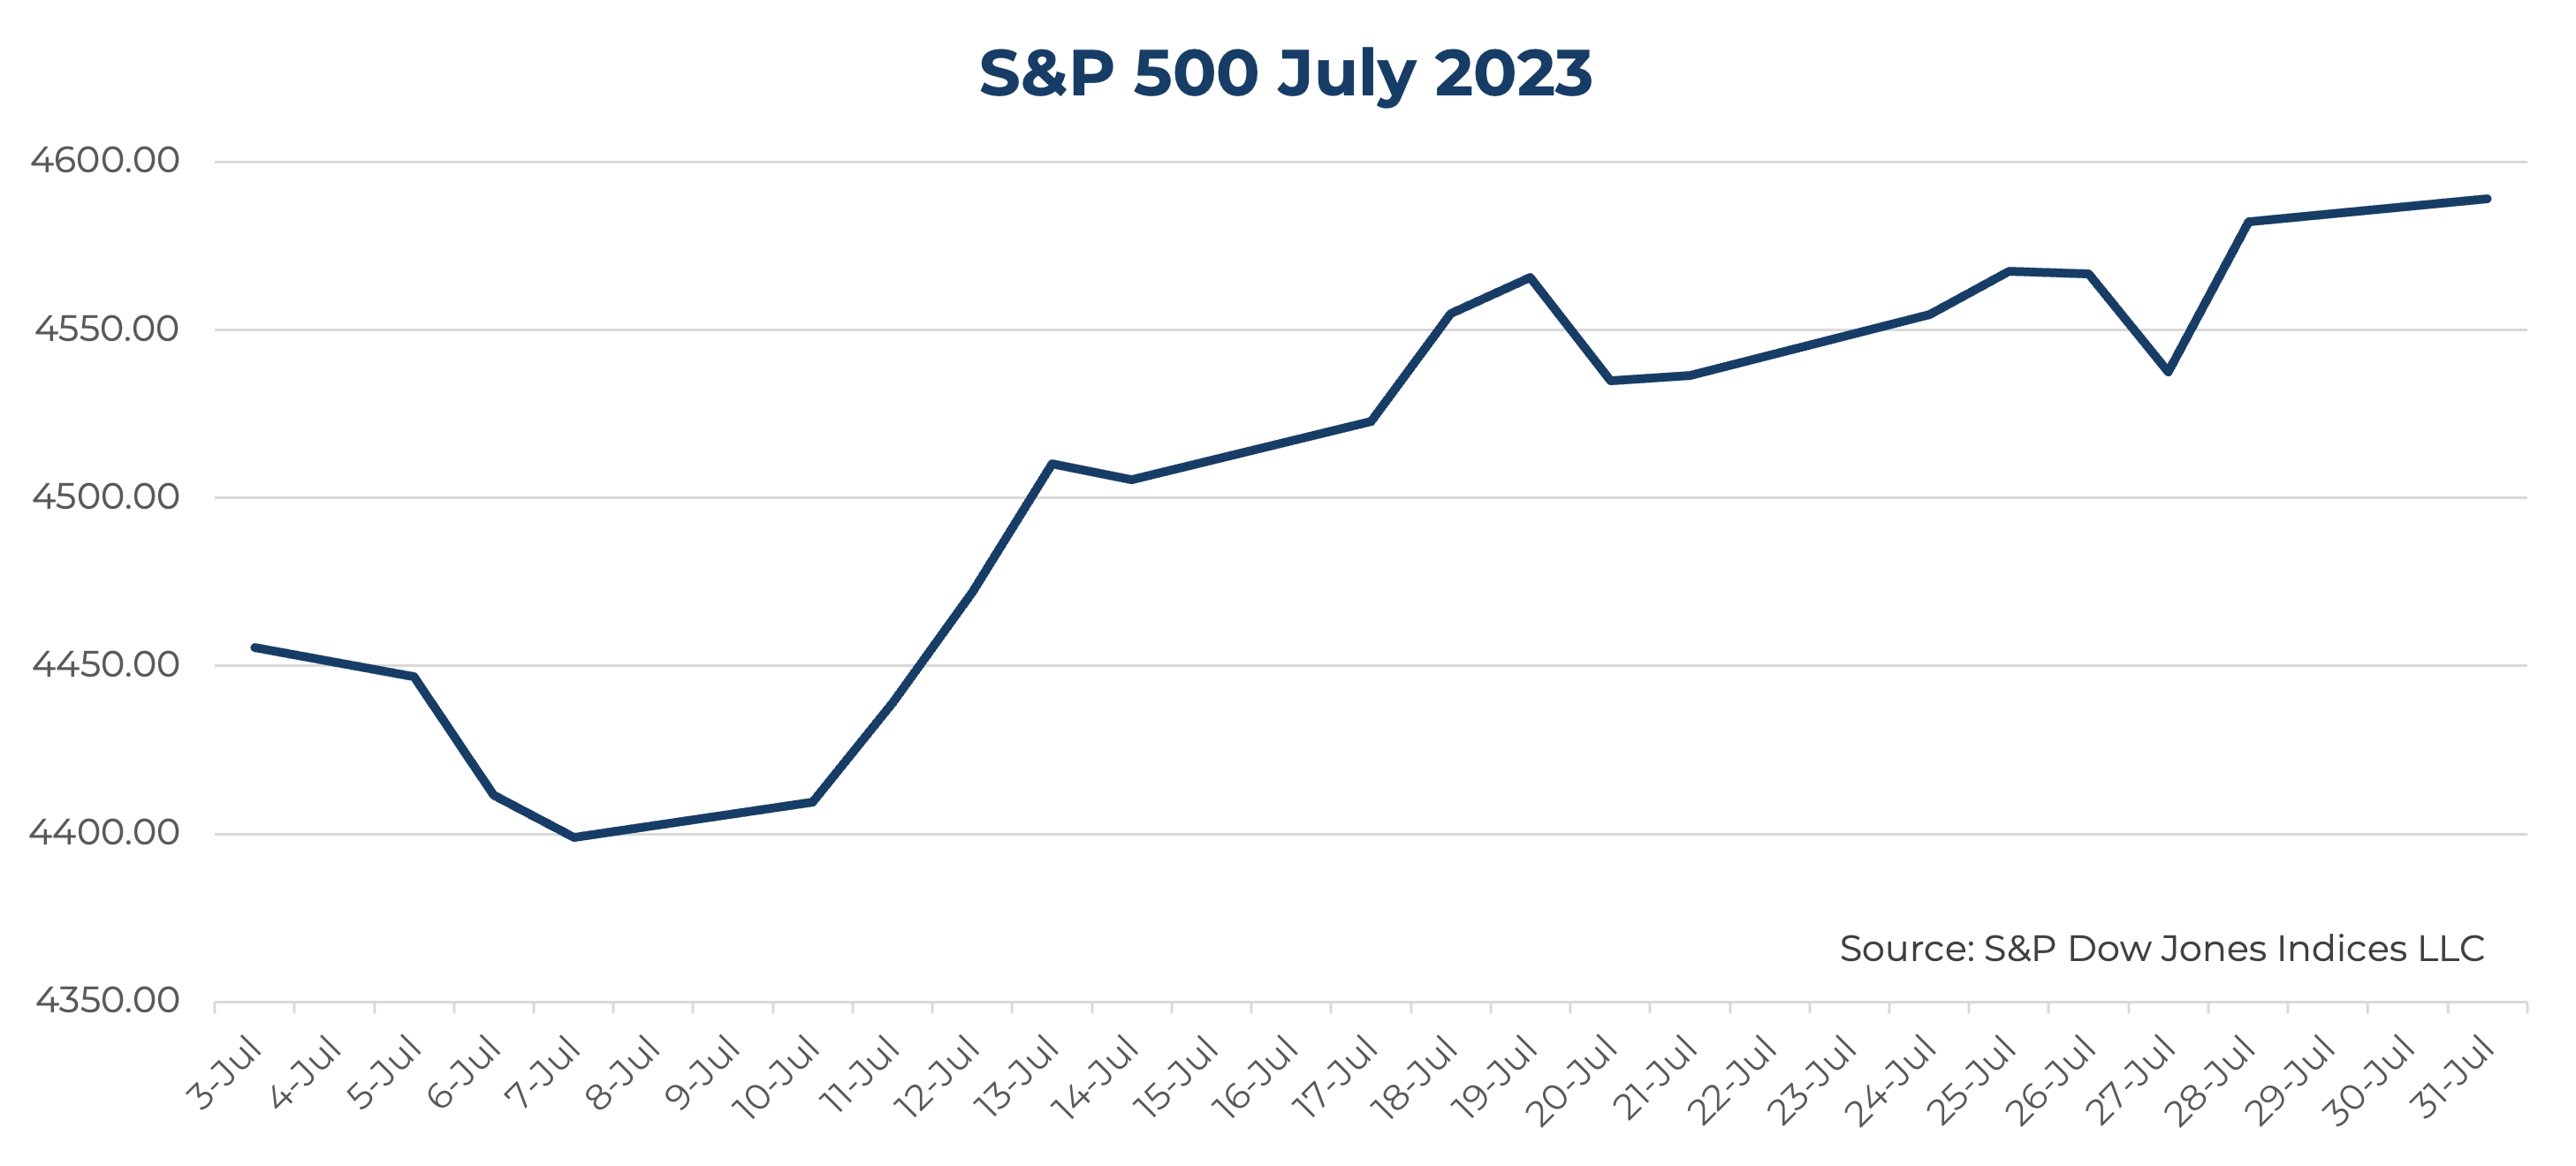 S&P 500 July 2023